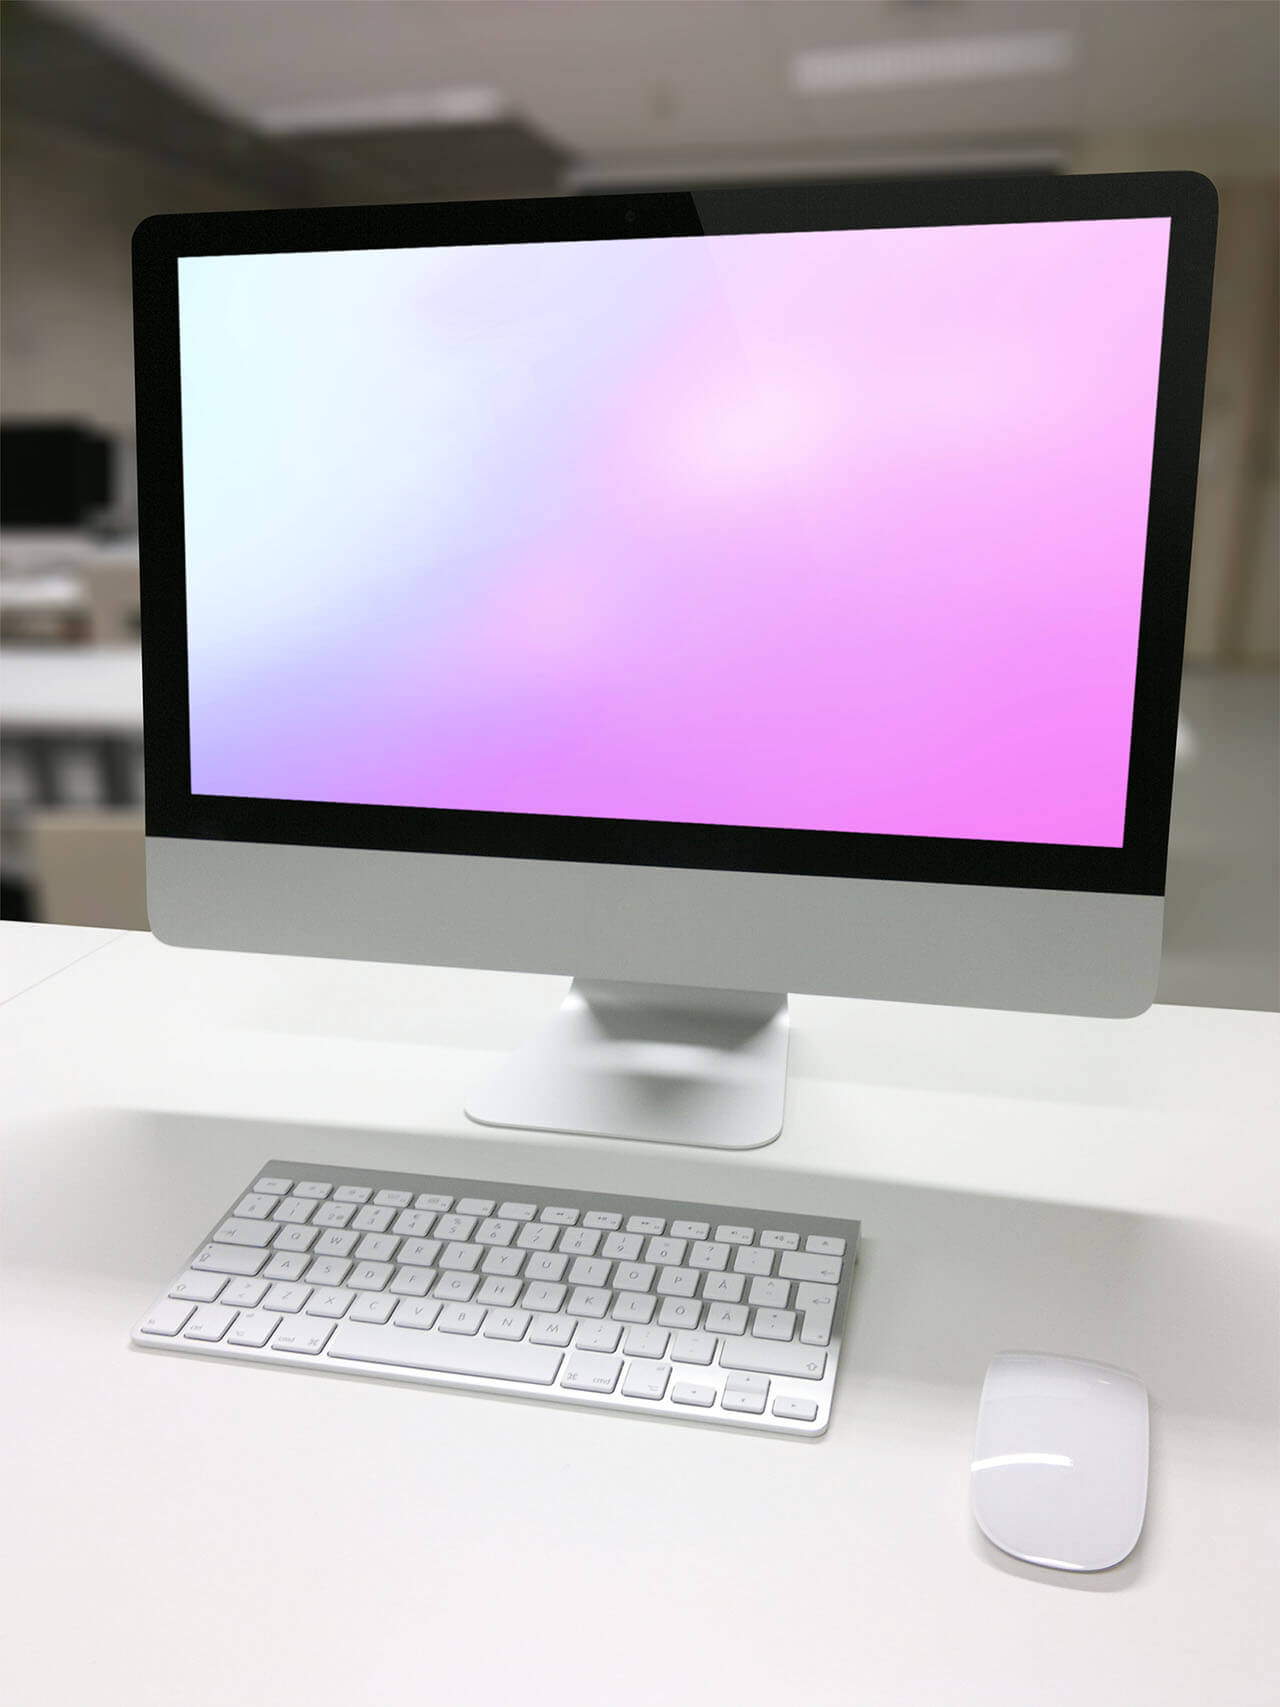 19-imac-computer-on-office-desk-mockup